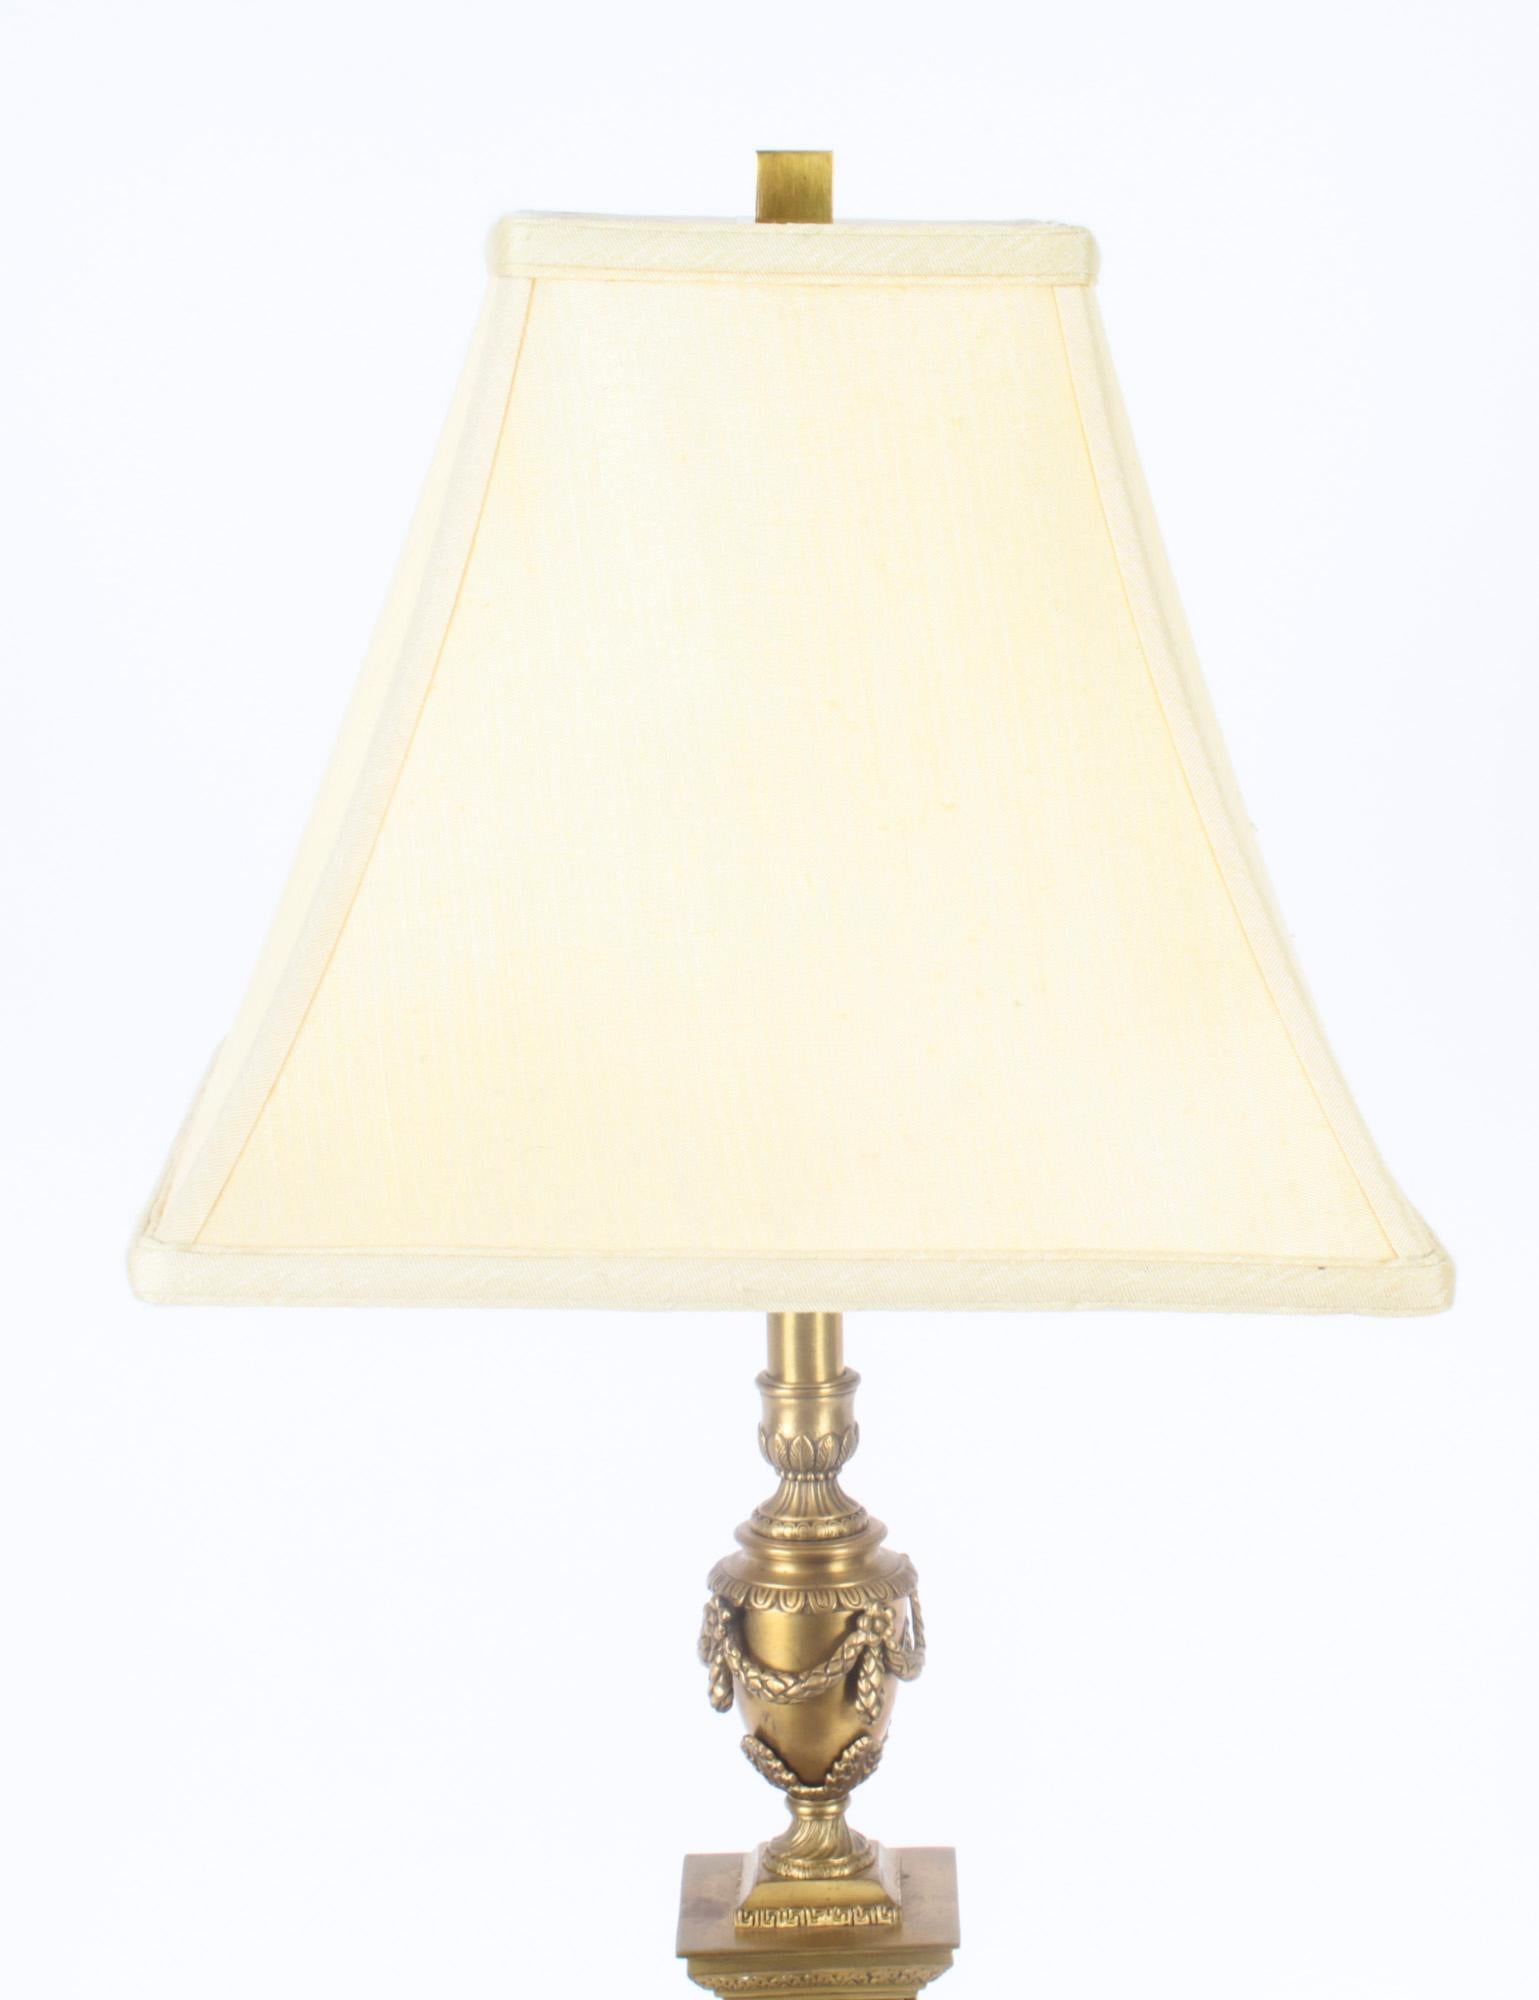 Vintage Set of 4 Corinthian Column Ormolu & Glass Table Lamps, Mid-20th Century For Sale 8